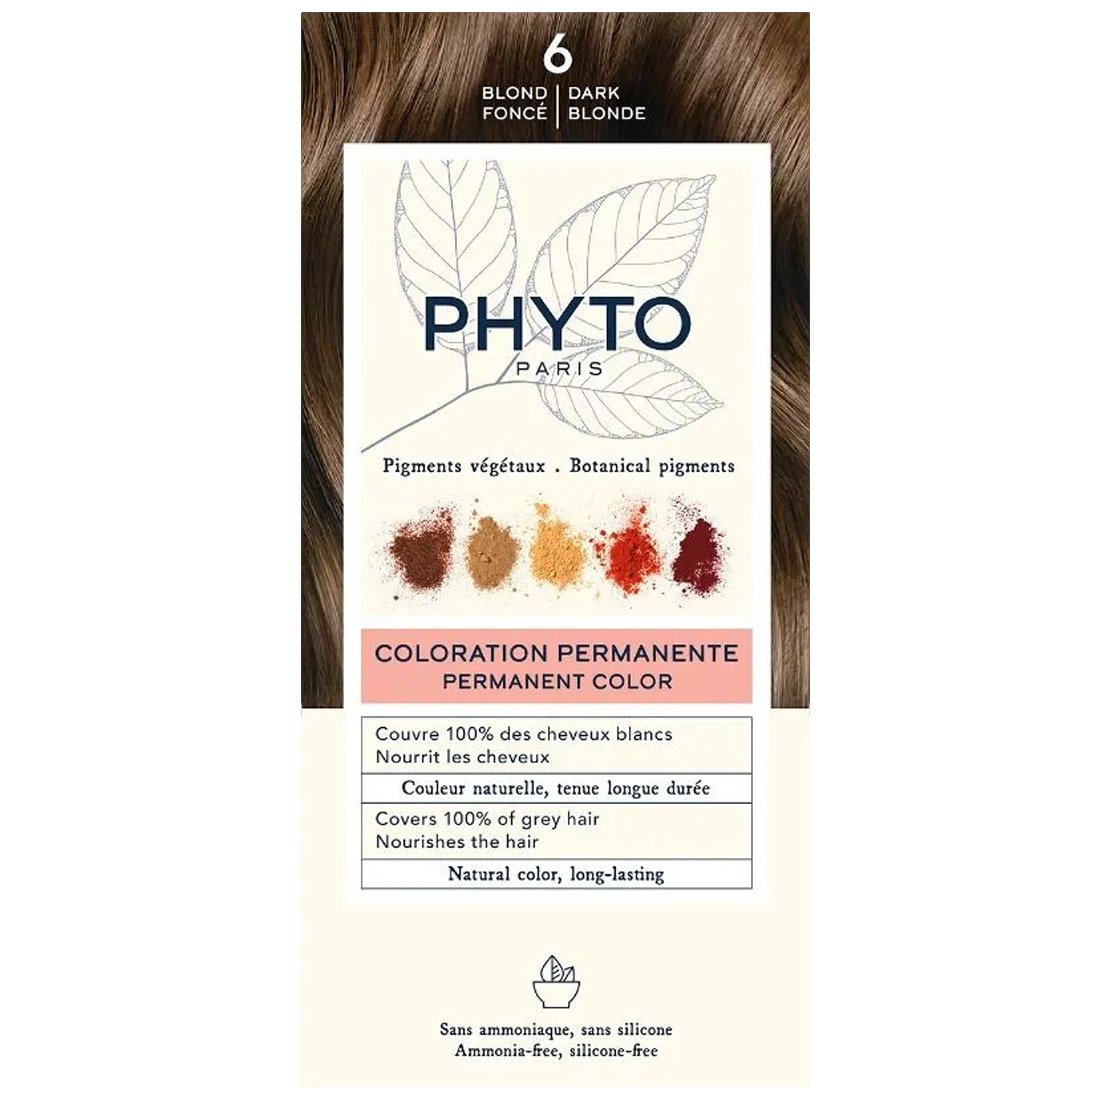 Phyto Permanent Hair Color Kit Μόνιμη Βαφή Μαλλιών με Φυτικές Χρωστικές, Χωρίς Αμμωνία 1 Τεμάχιο – 6 Ξανθό Σκούρο